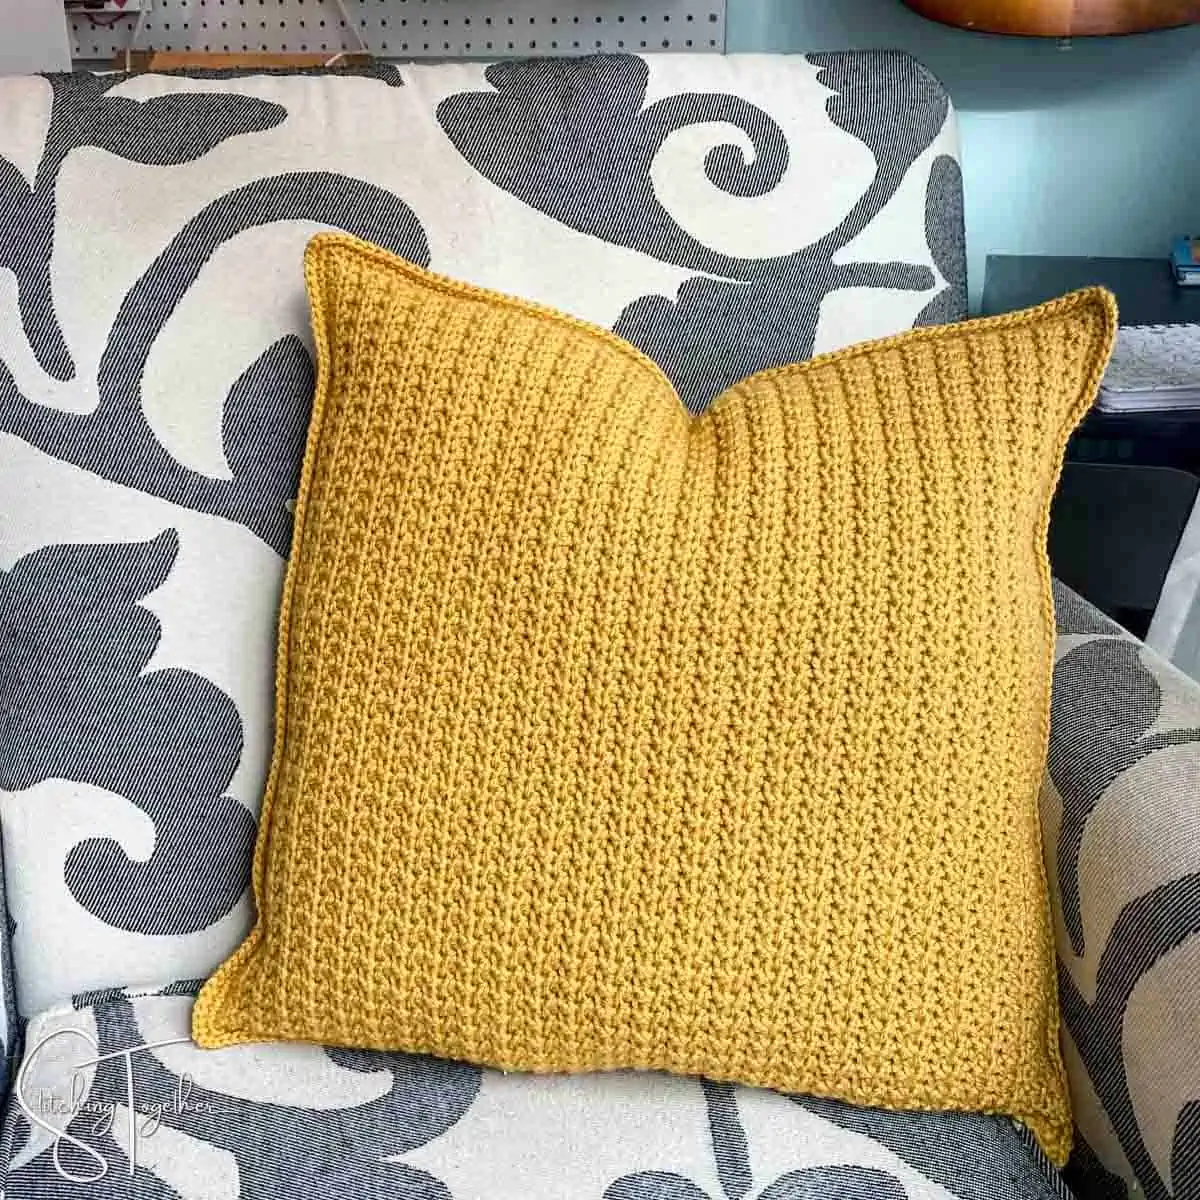 https://www.stitching-together.com/wp-content/uploads/2022/10/textured-crochet-cushion.webp